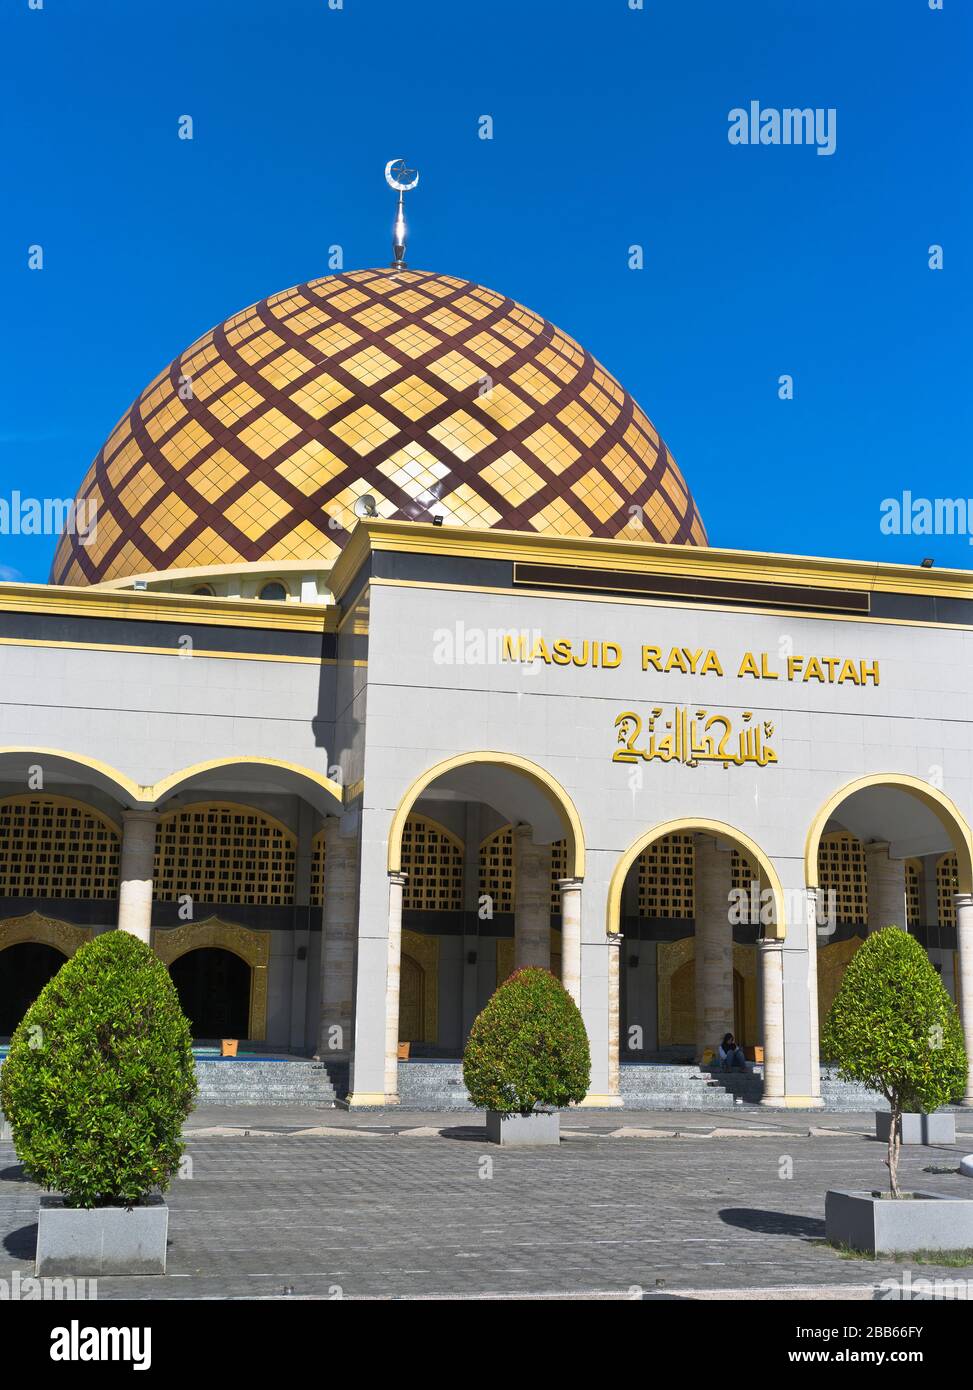 dh Masjid Raya al Fatah AMBON MALUKU INDONESIA Domed Grand mosque dome indonesian architecture islamic domes roof design Stock Photo